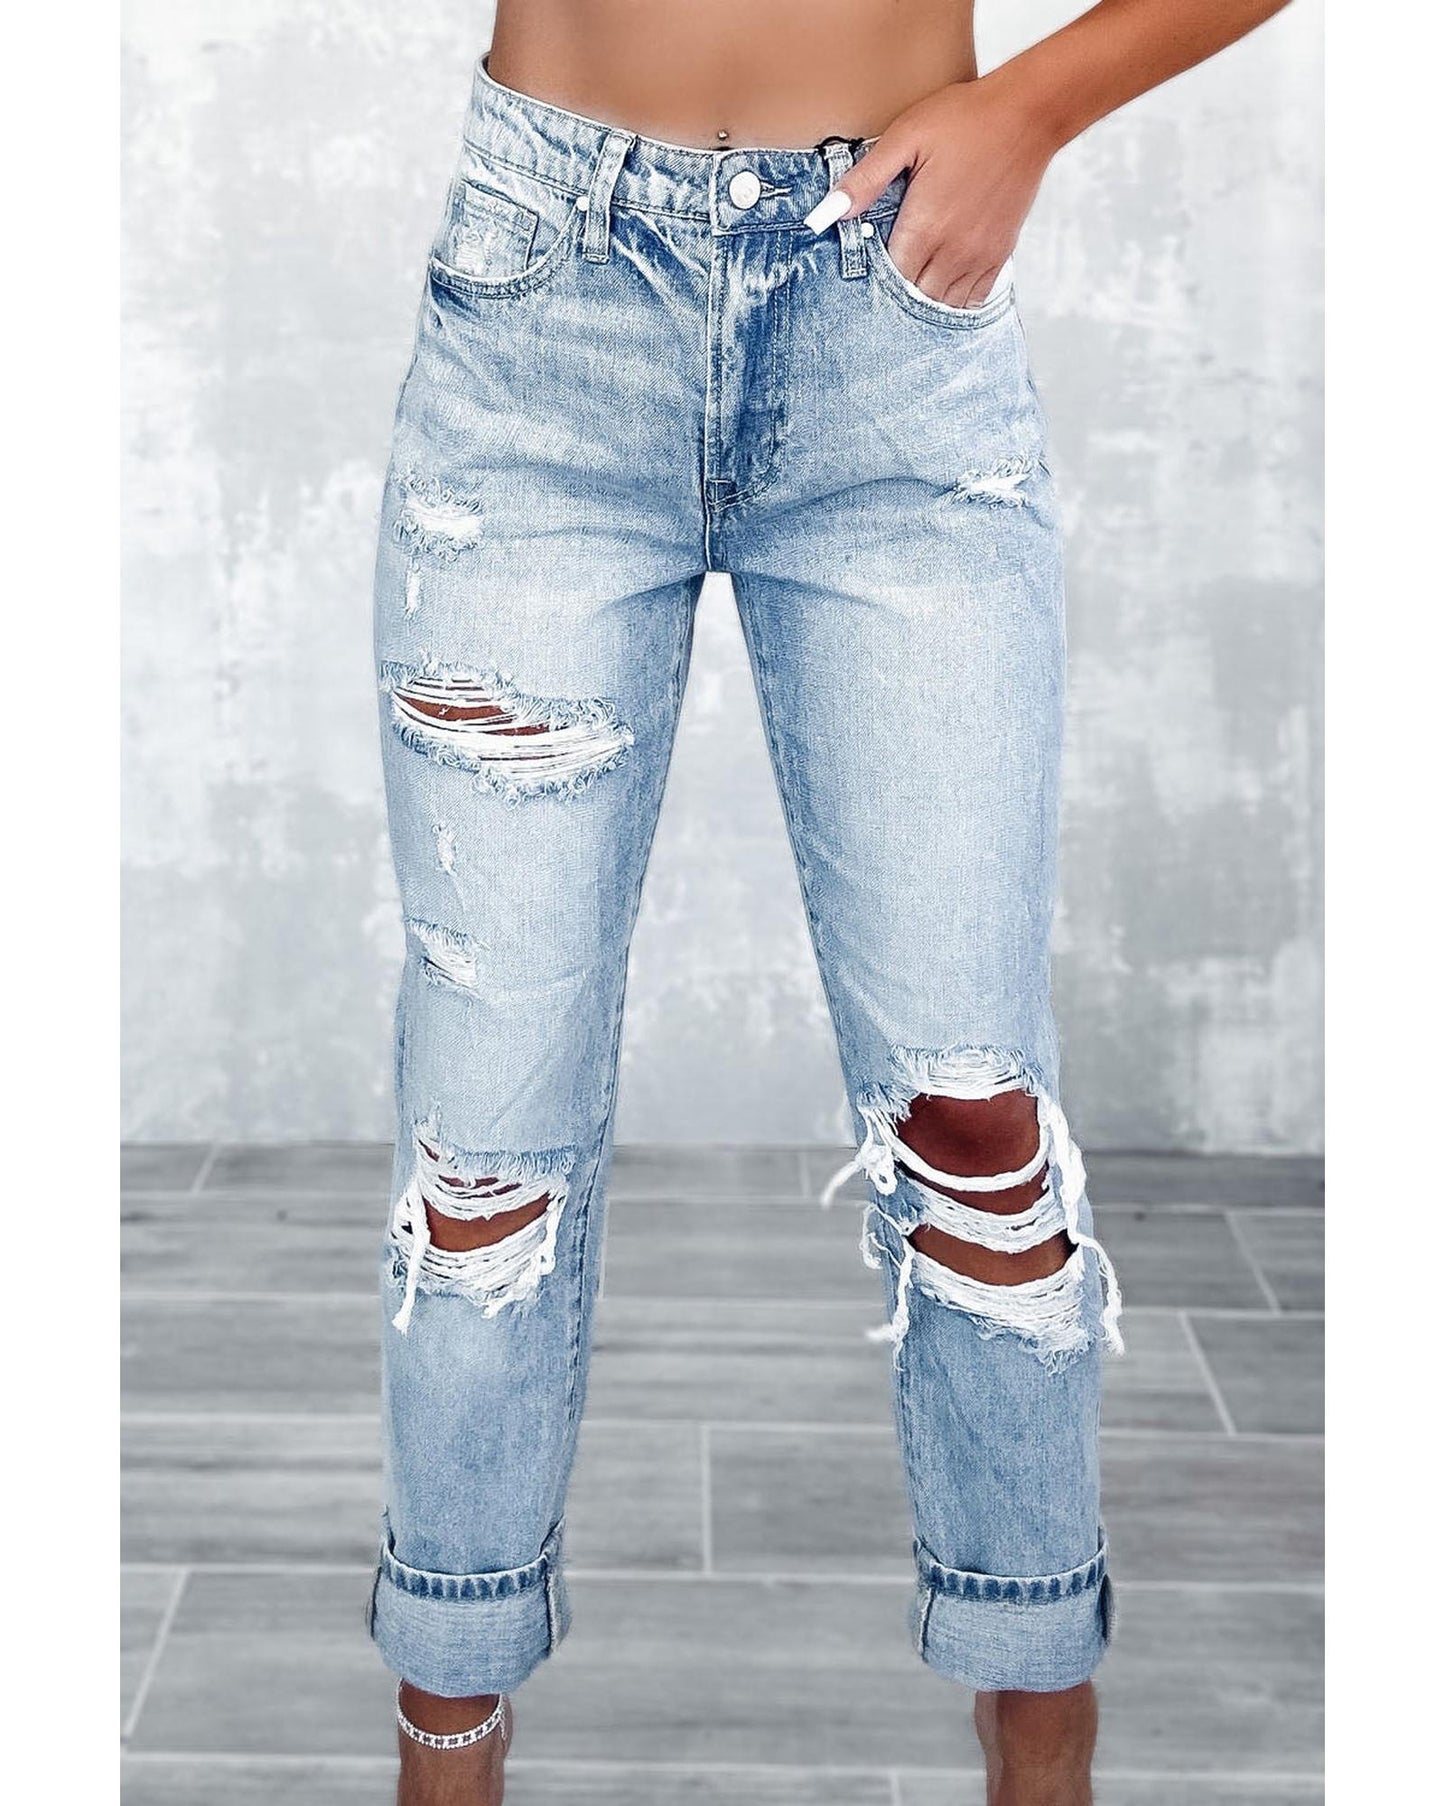 Azura Exchange Frayed Sky Blue Slim Fit High Waist Jeans - 12 US